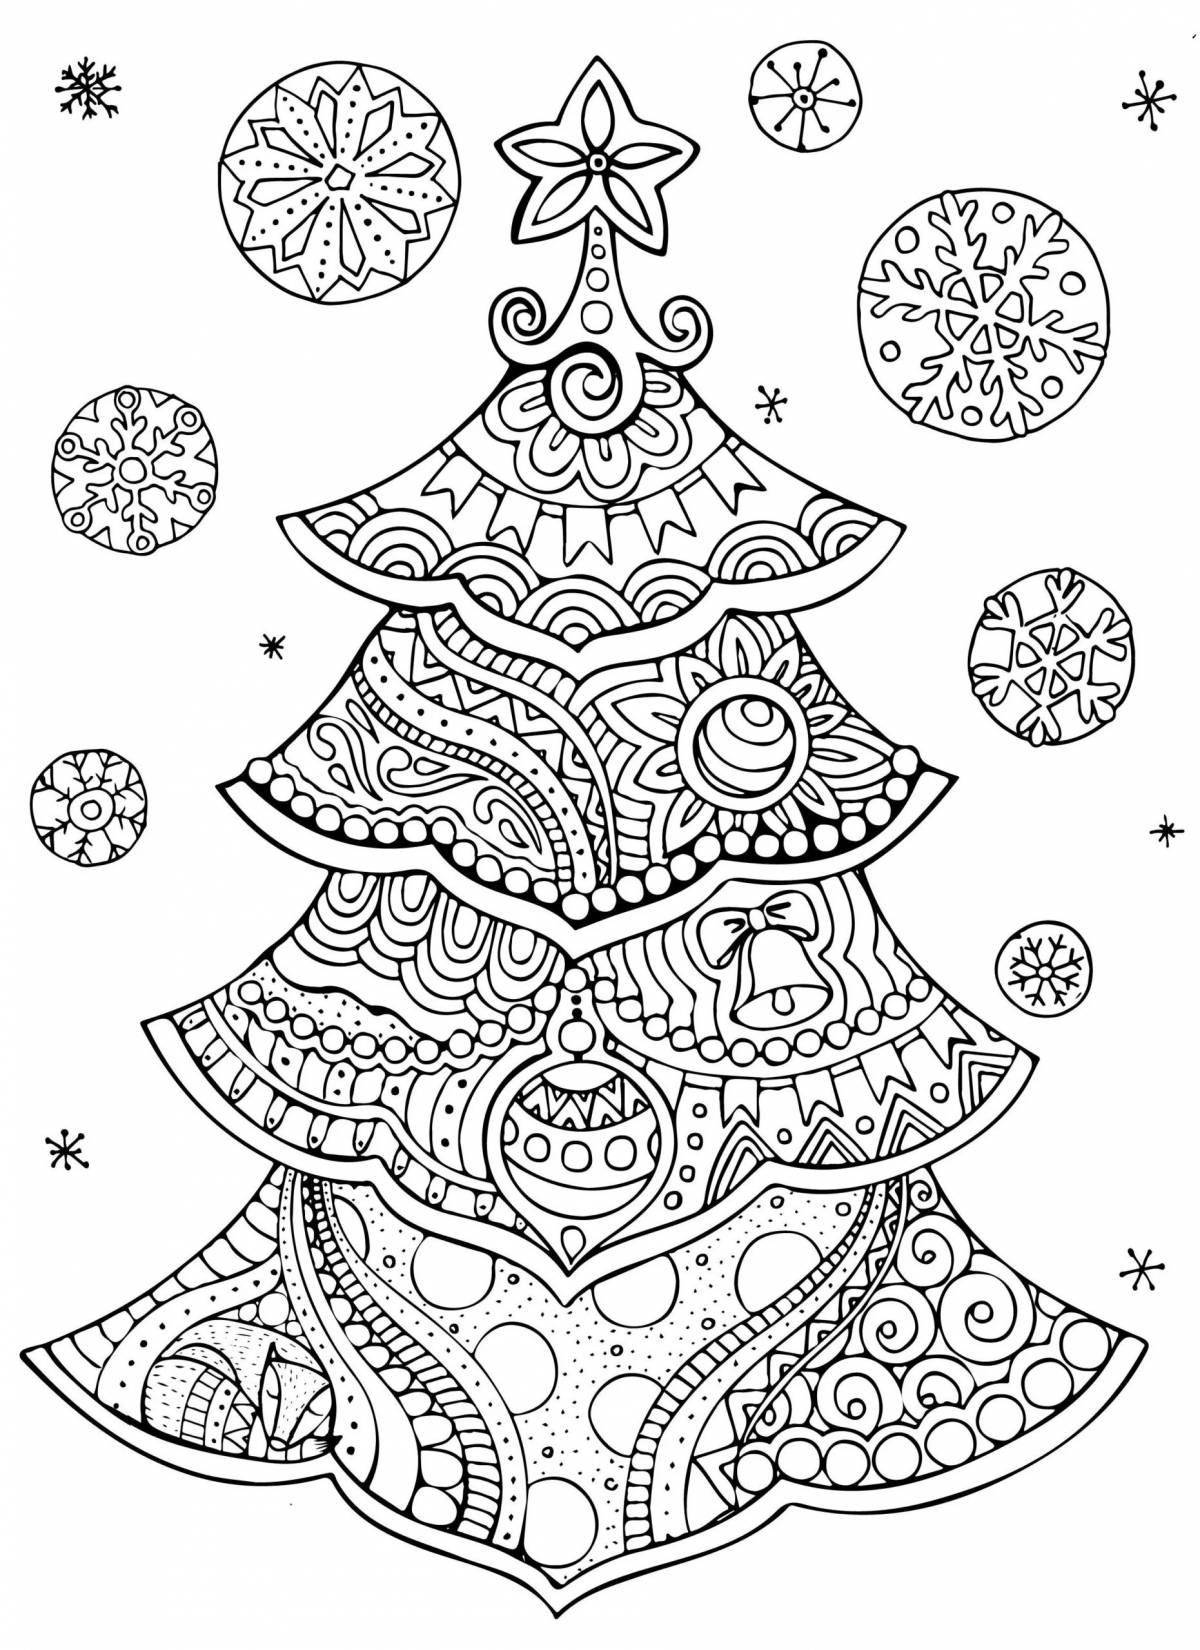 Adorable Christmas tree coloring page